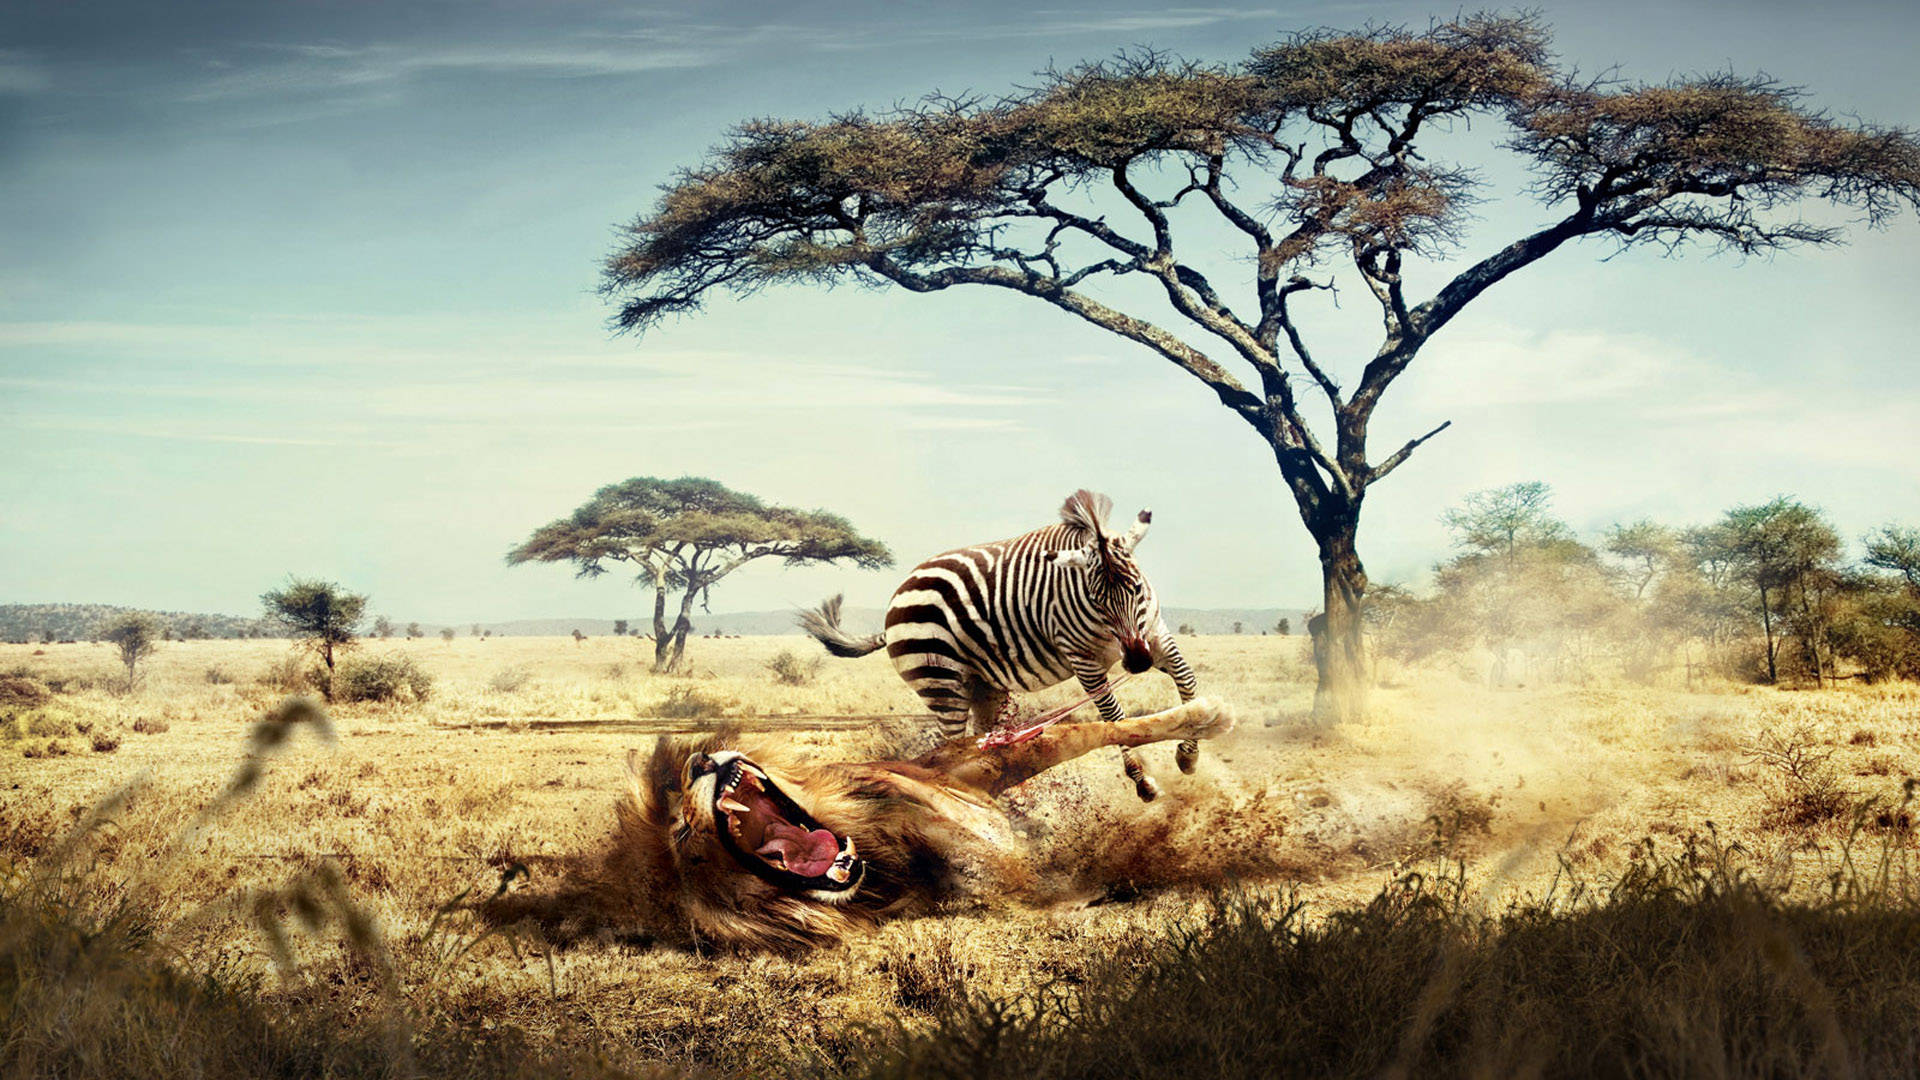 Lion Zebra Fighting Awesome Animal